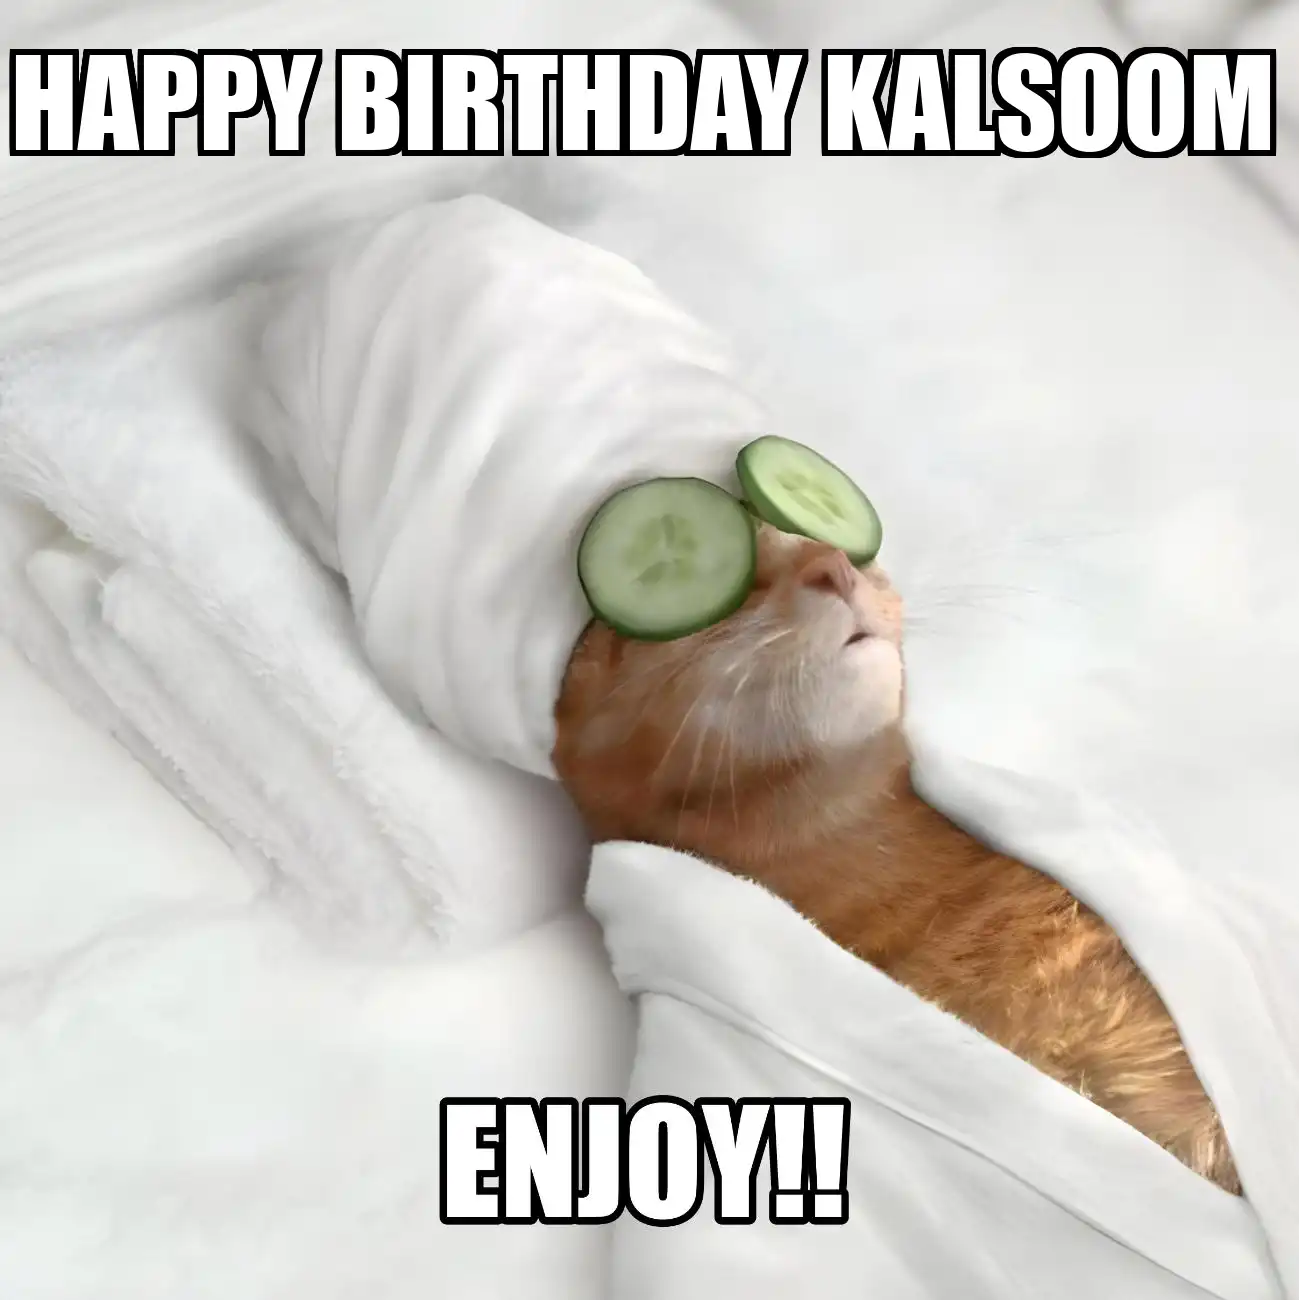 Happy Birthday Kalsoom Enjoy Cat Meme